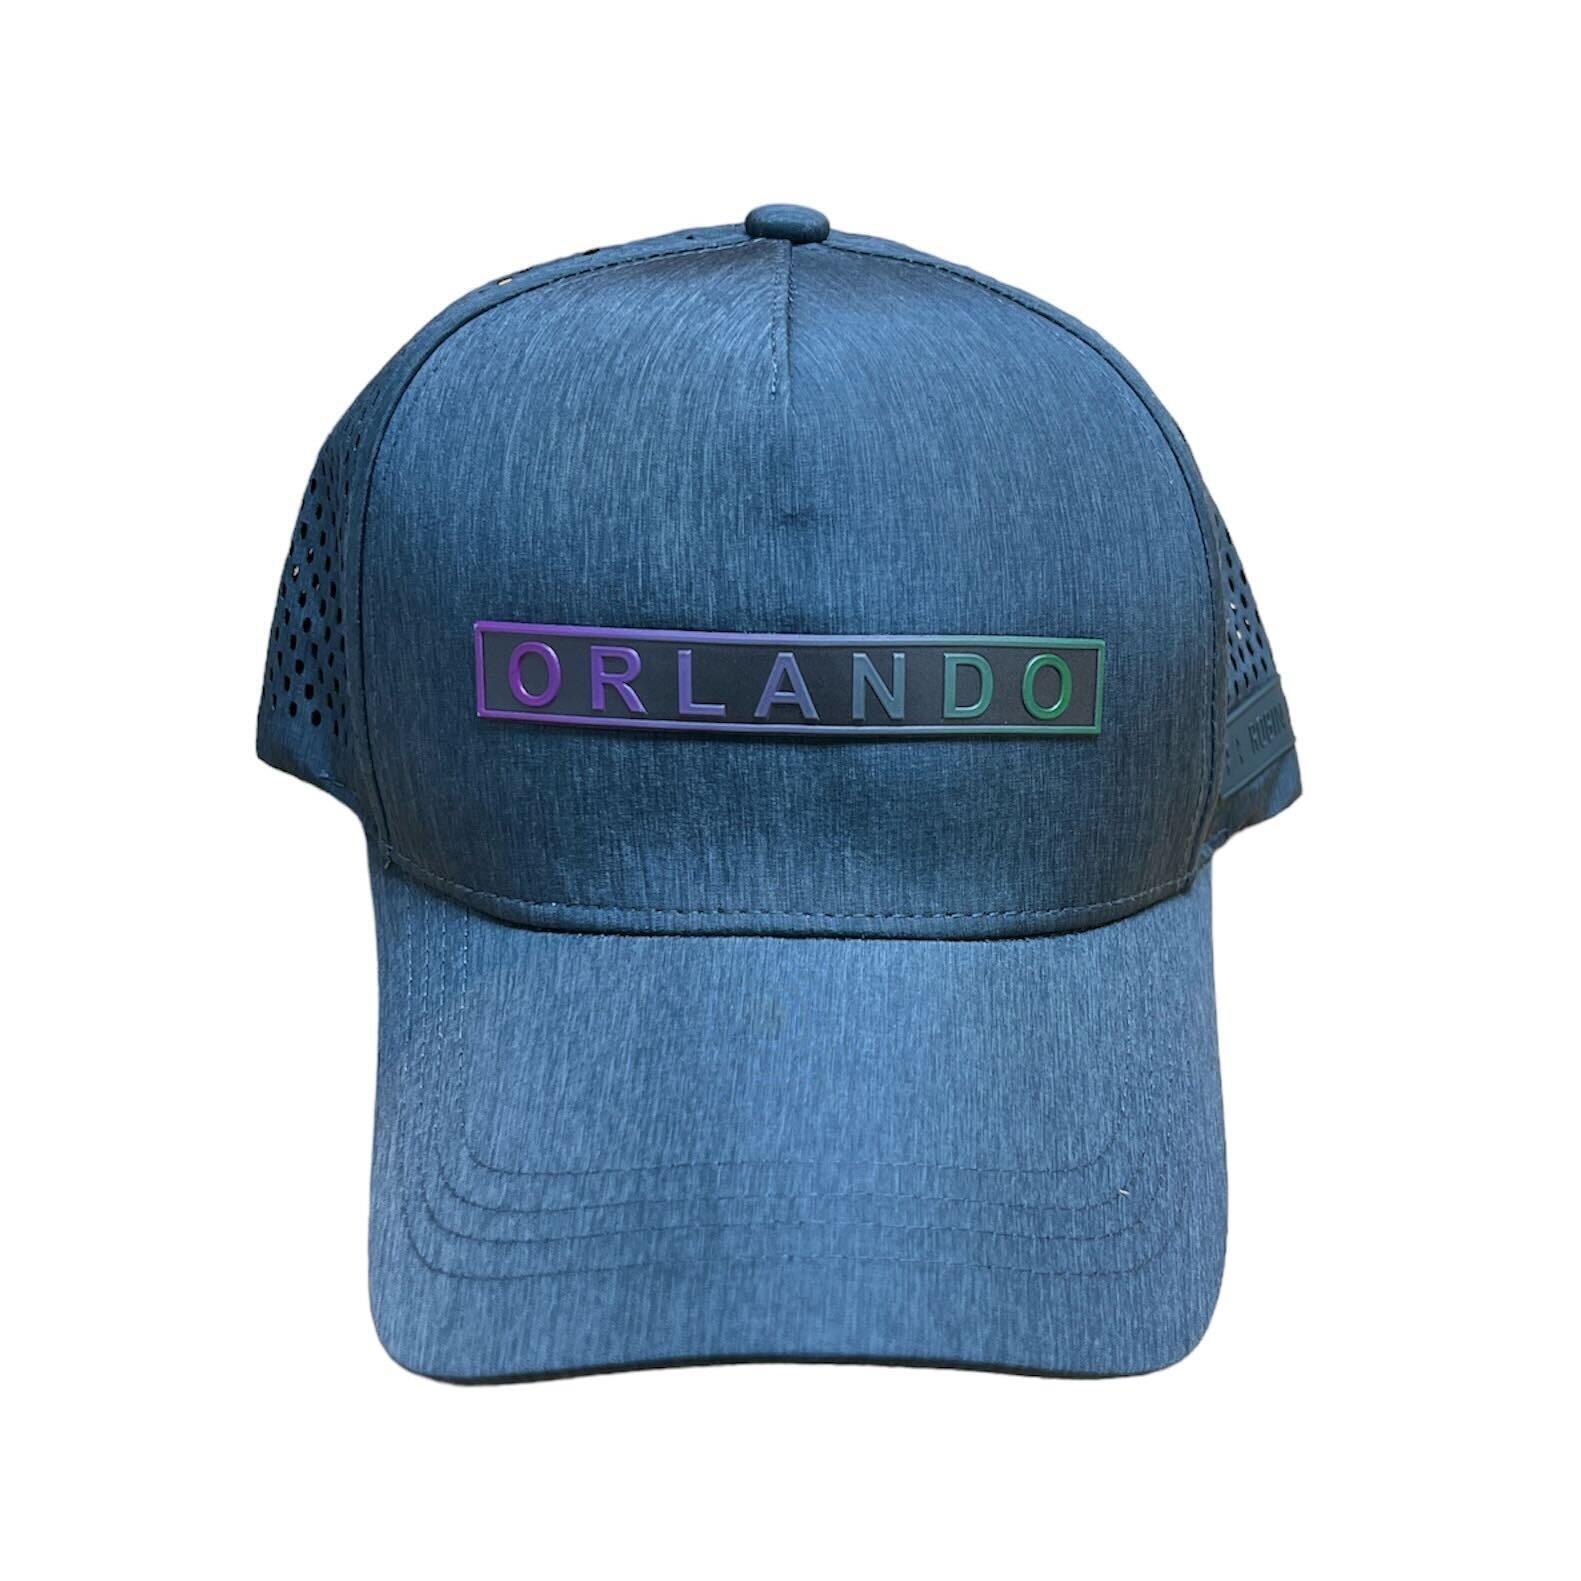 Orlando Holographic Curved Cap - Grey